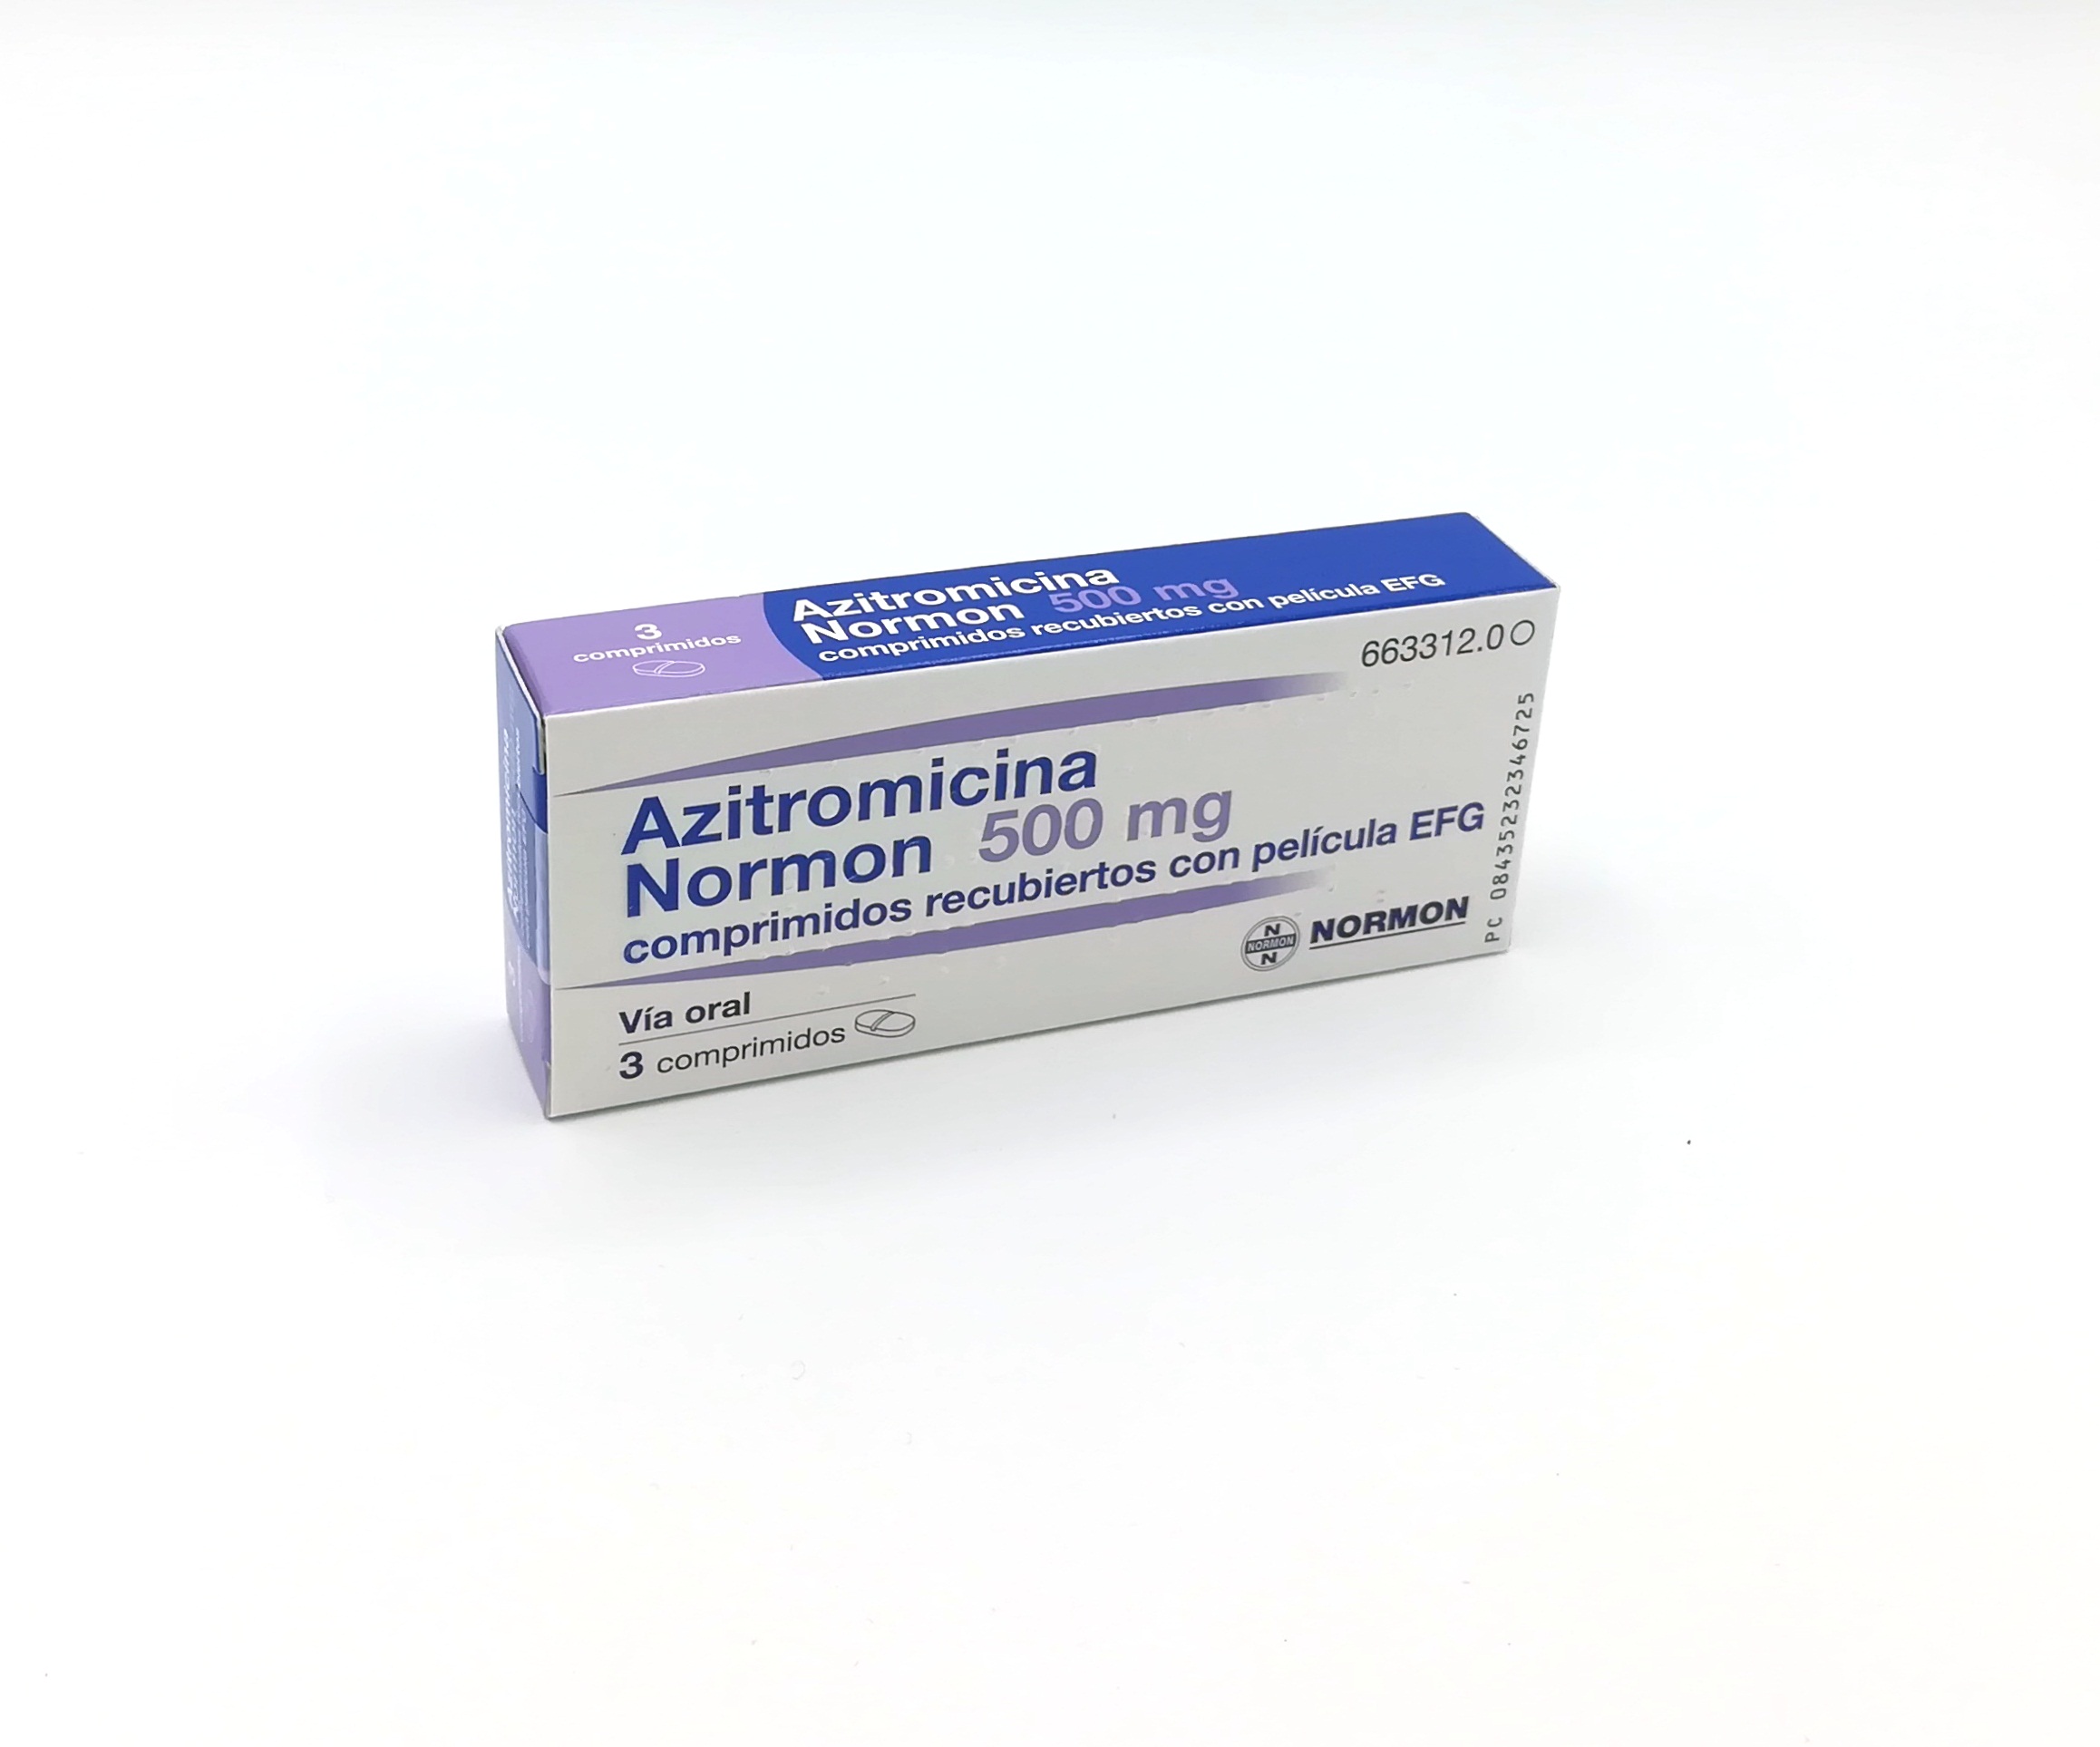 AZITROMICINA NORMON EFG 500 mg 3 COMPRIMIDOS RECUBIERTOS - Farmacéuticos